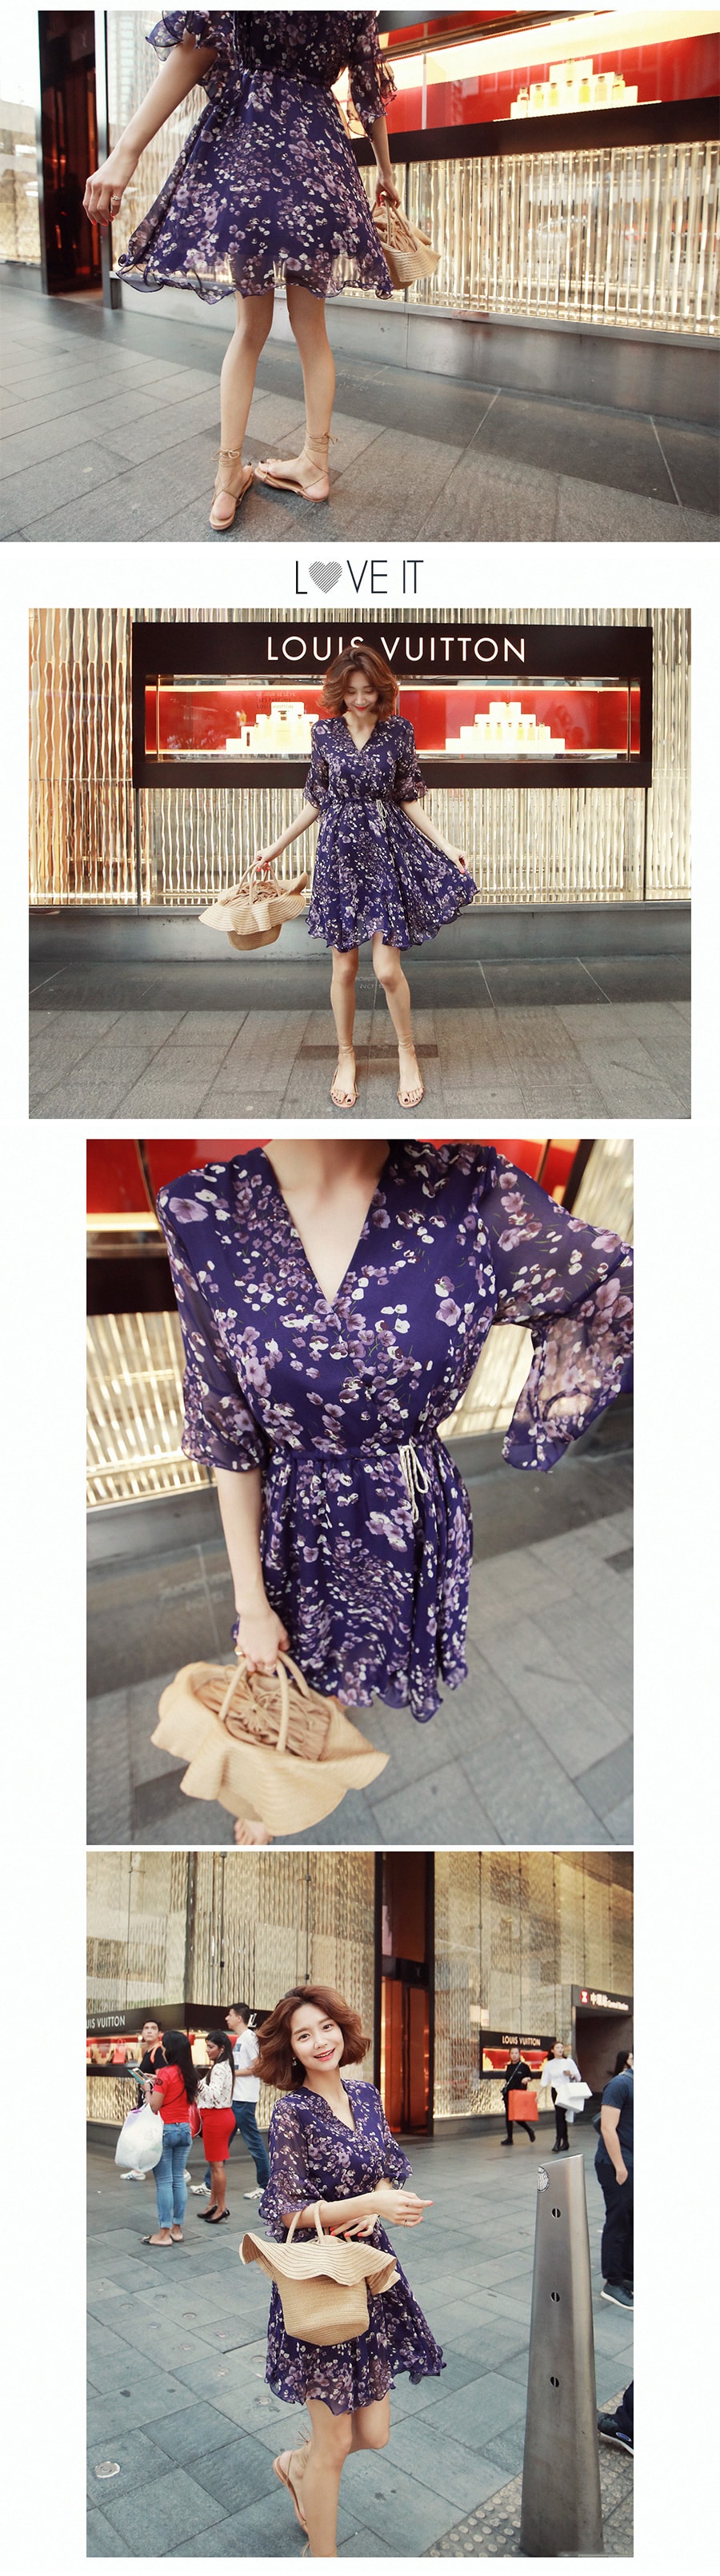 KOREA Floral Chiffon Wrap Dress #Purple One Size(S-M) [Free Shipping]